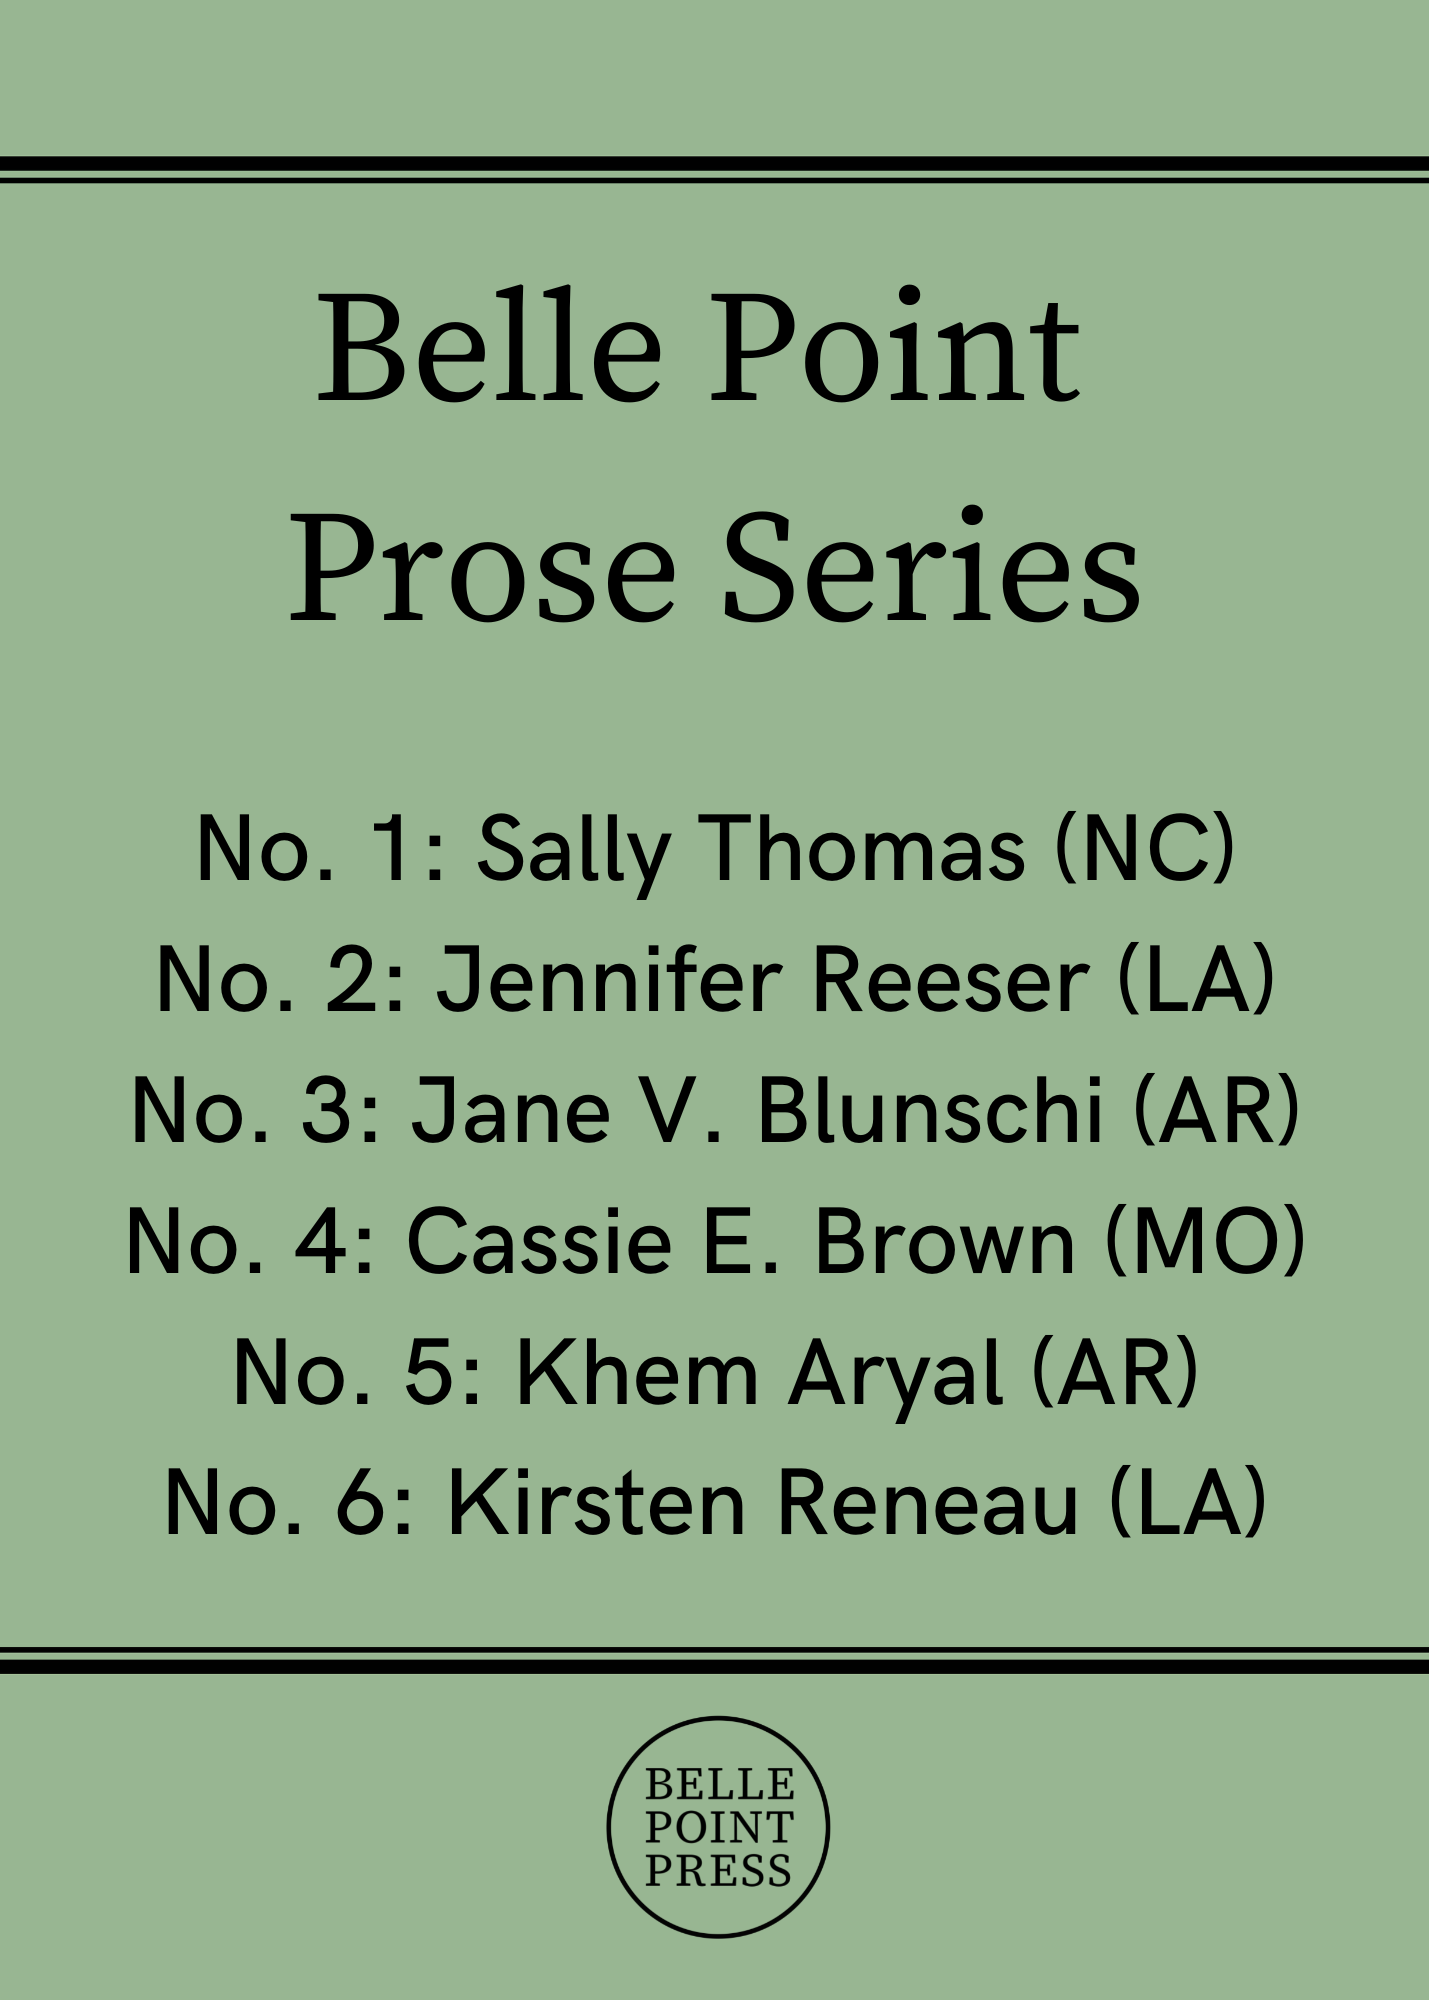 Belle Point Prose Series: No. 1: Sally Thomas (NC) No. 2: Jennifer Reeser (LA) No. 3: Jane V. Blunschi (AR) No. 4: Cassie E. Brown (MO) No. 5: Khem Aryal (AR) No. 6: Kirsten Reneau (LA)